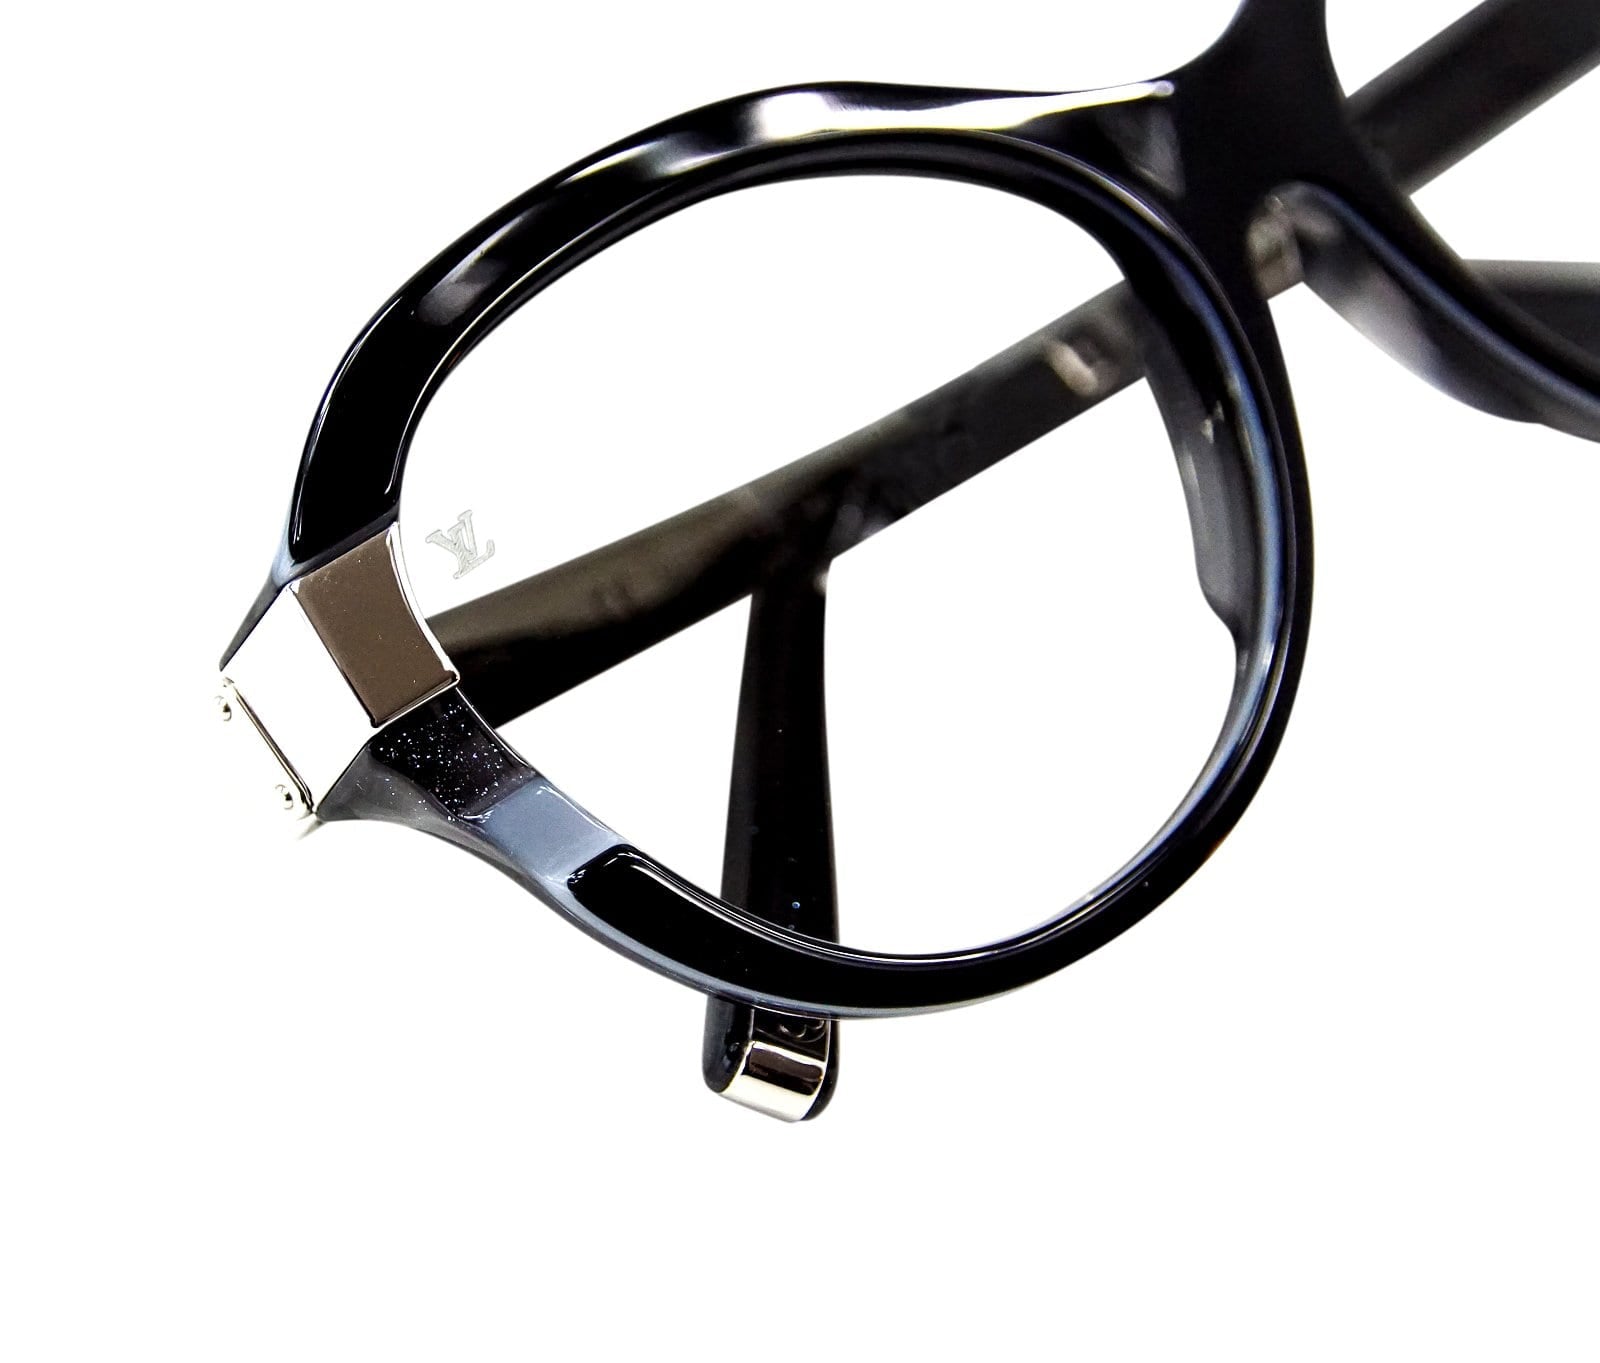 Louis Vuitton Sunglasses Black Petit Soupcon Cat Eye - mightychic